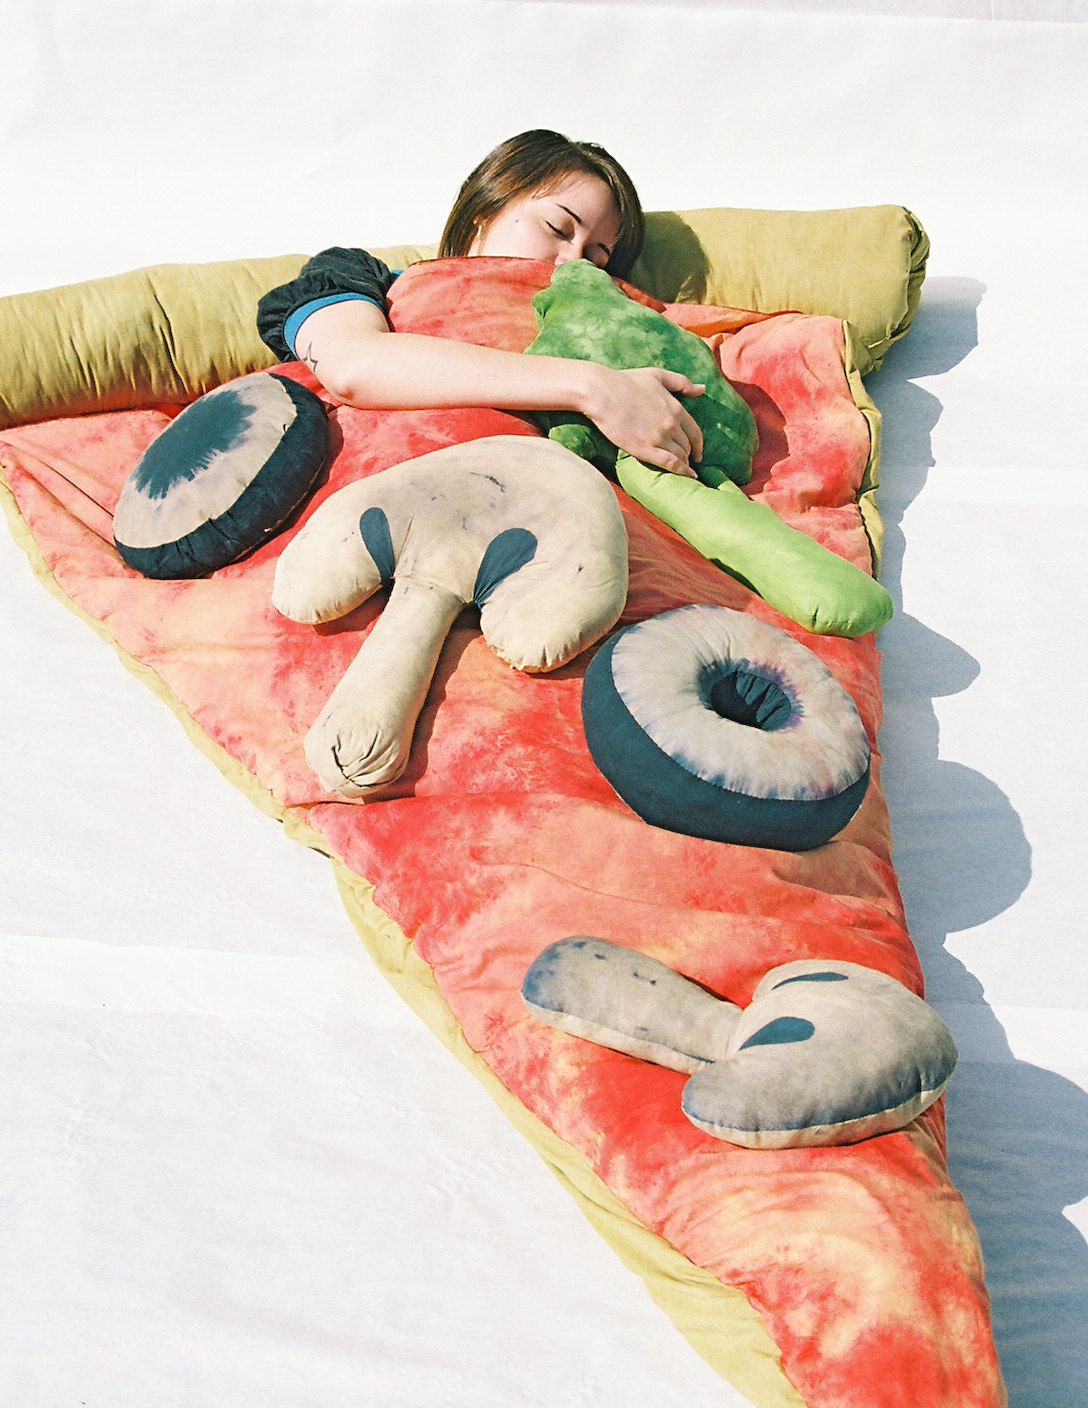 Awe-inspiring Photos Of Pizza Slice Sleeping Bag Ideas